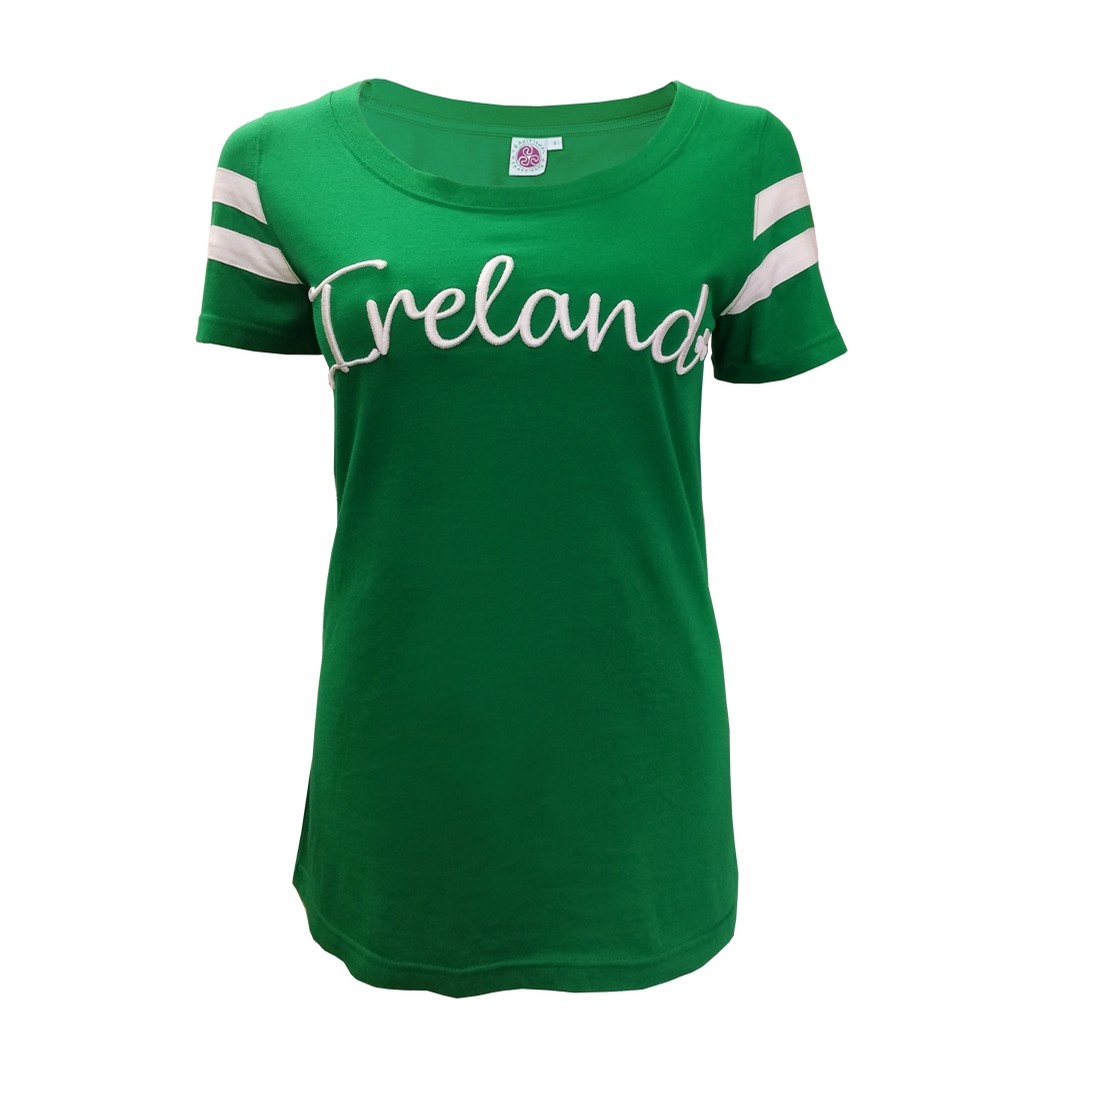 Irish Traditional Craft Ireland Ladies T Clothing Tops at Irish on Grand